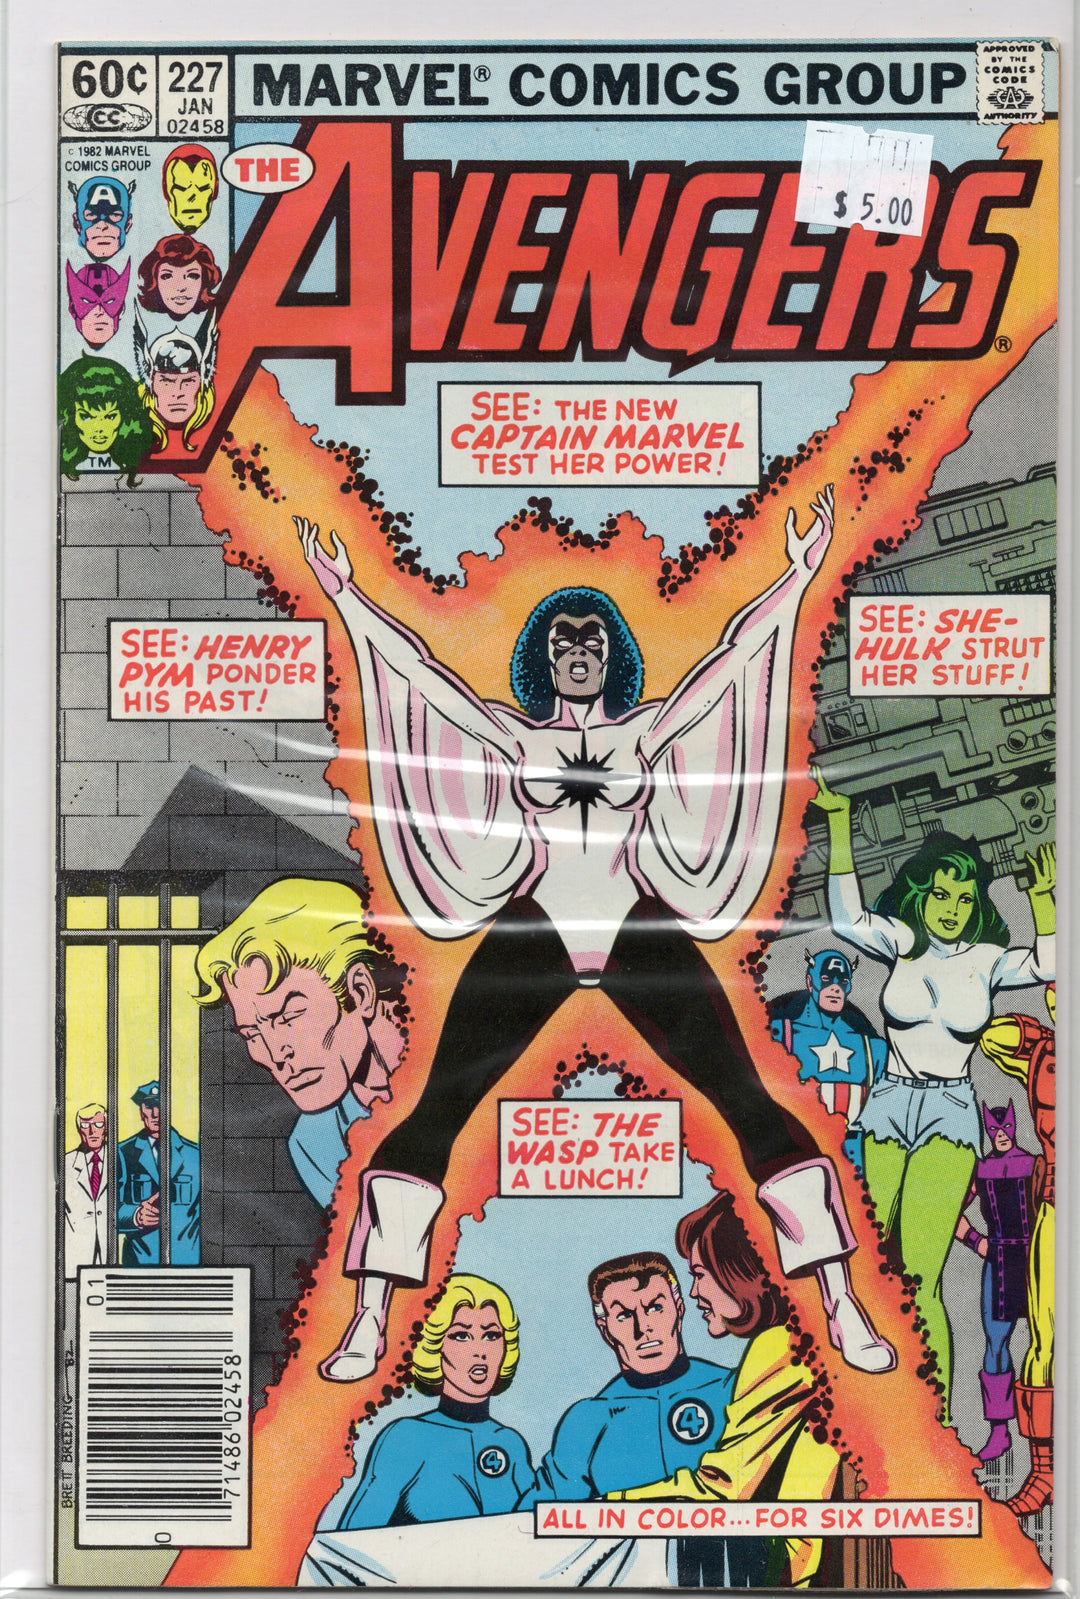 The Avengers #227